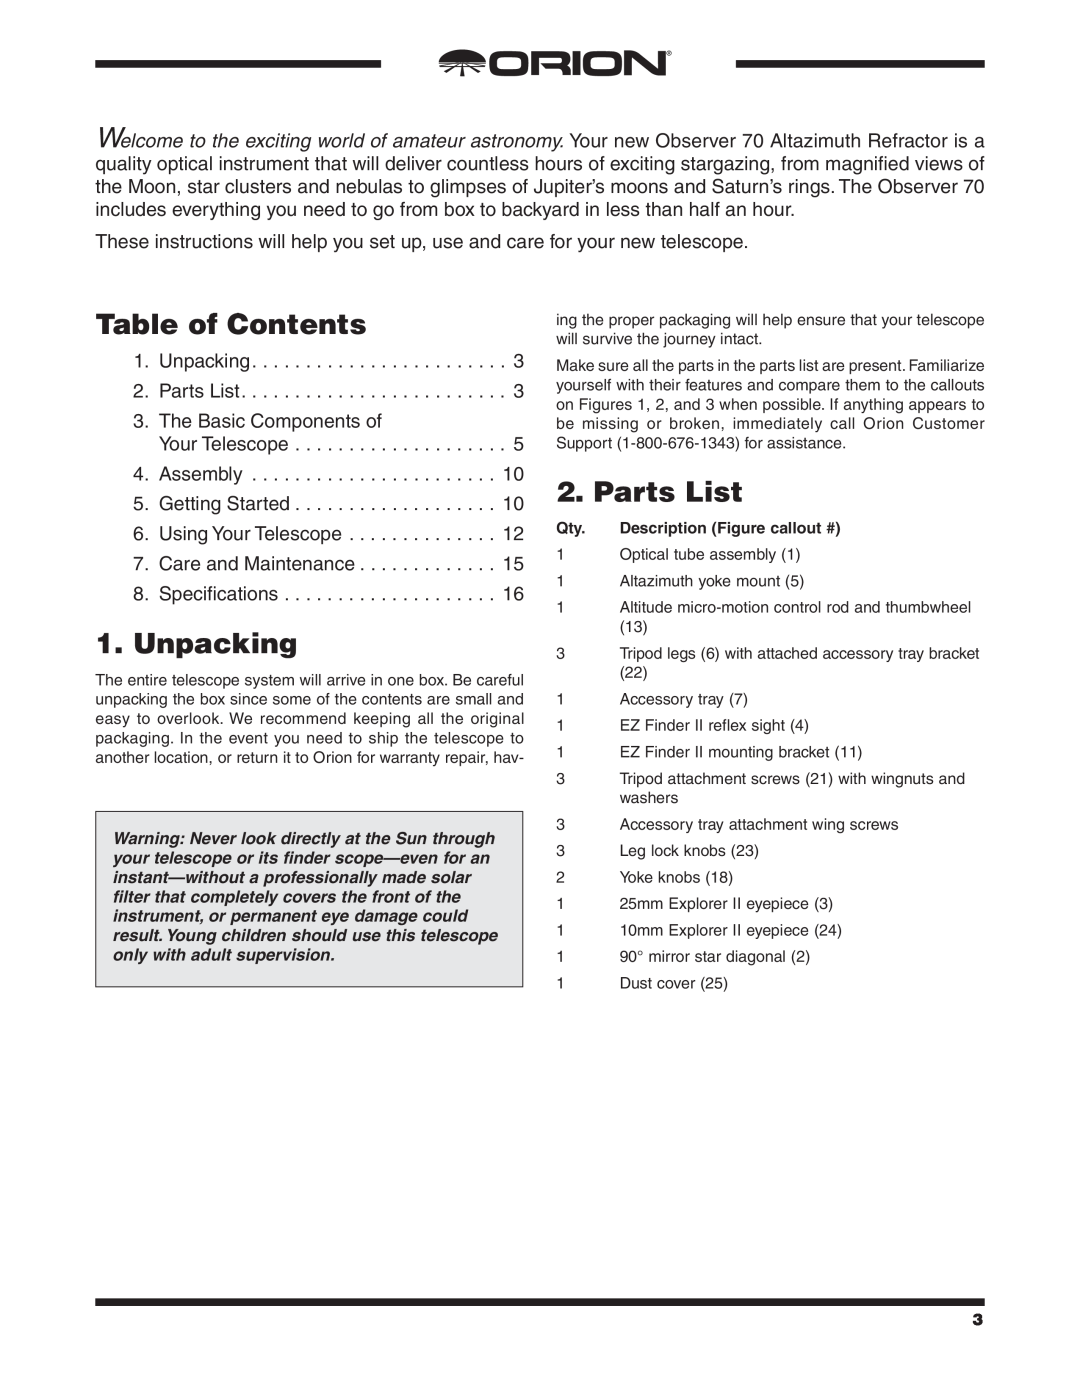 Orion 70MM AZ instruction manual Table of Contents, Unpacking, Parts List 